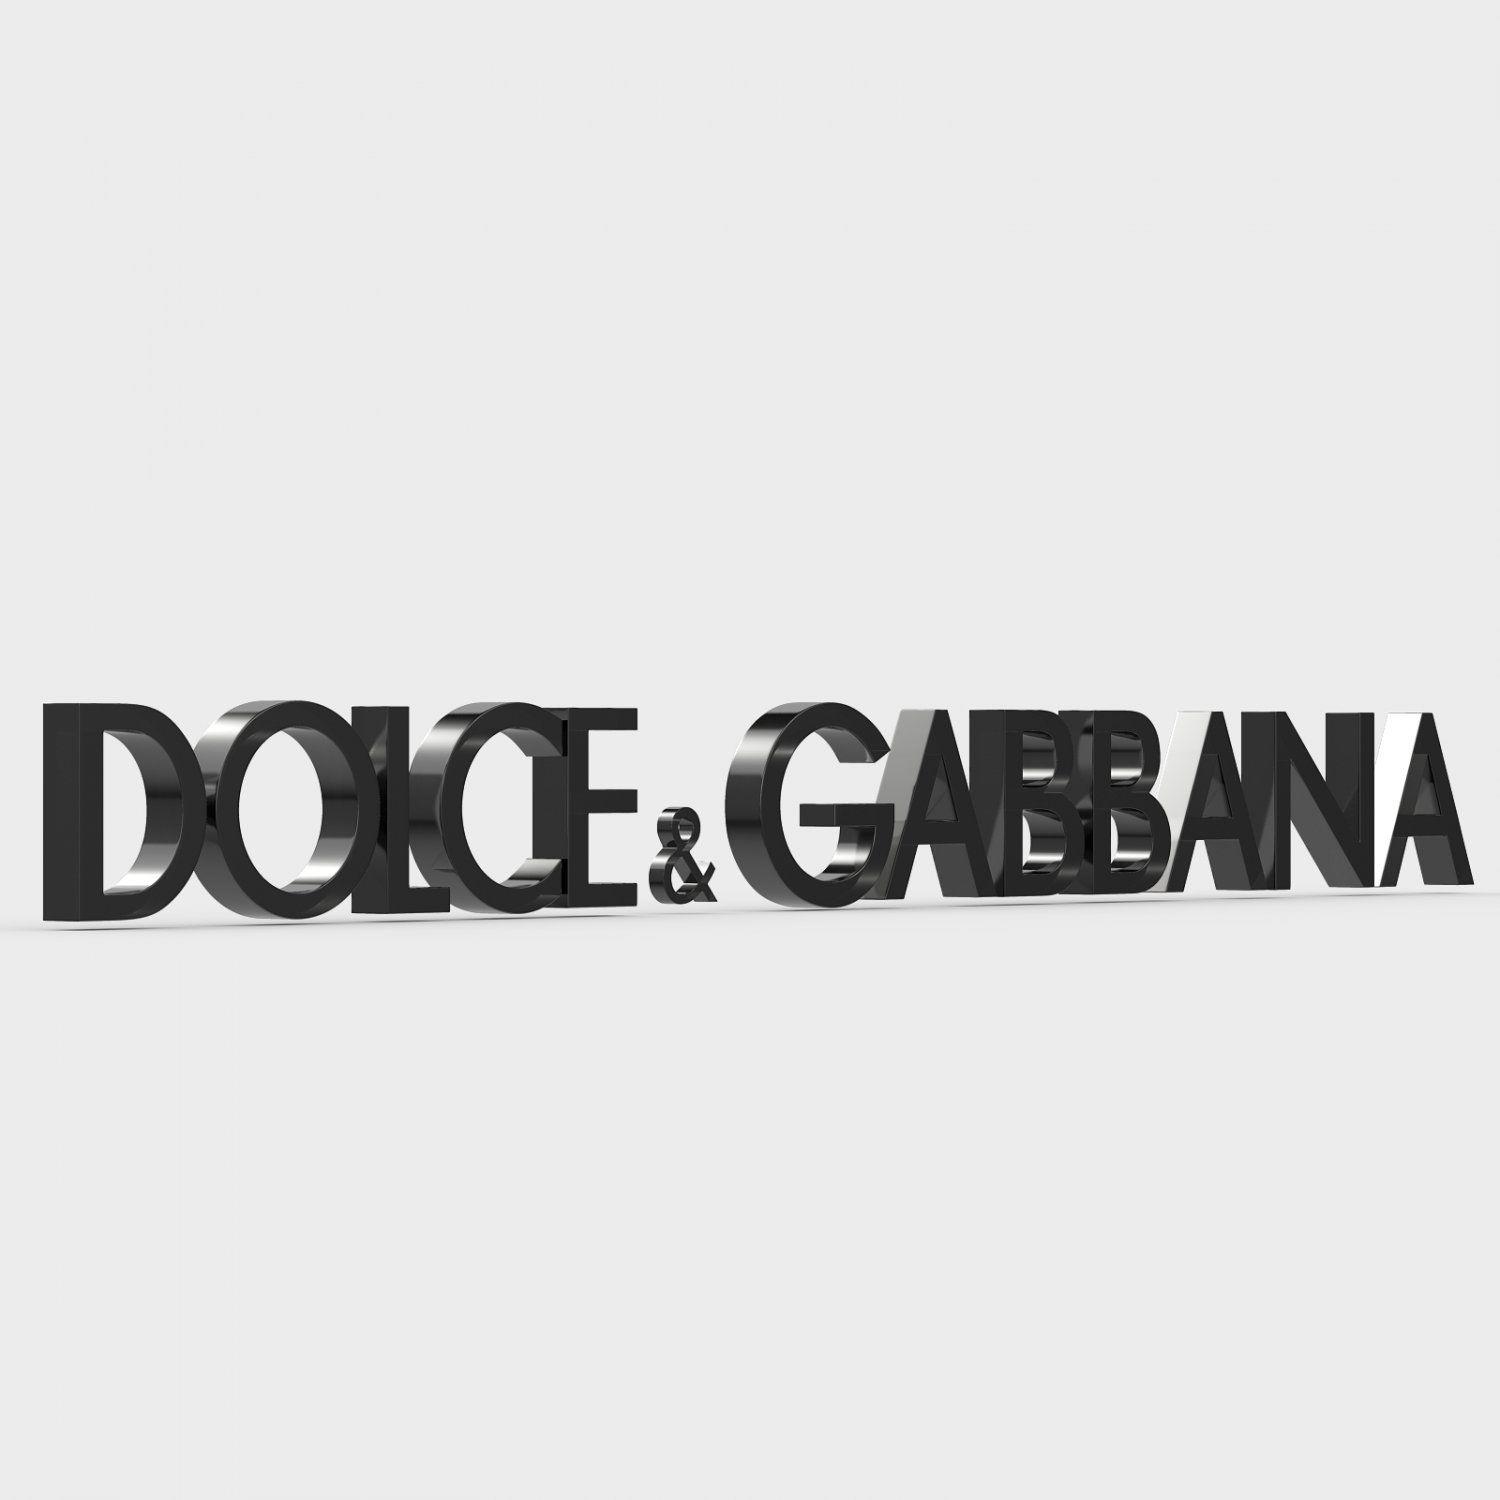 Dolce & Gabbana Logo - Dolce gabbana logo 3D Model in Clothing 3DExport